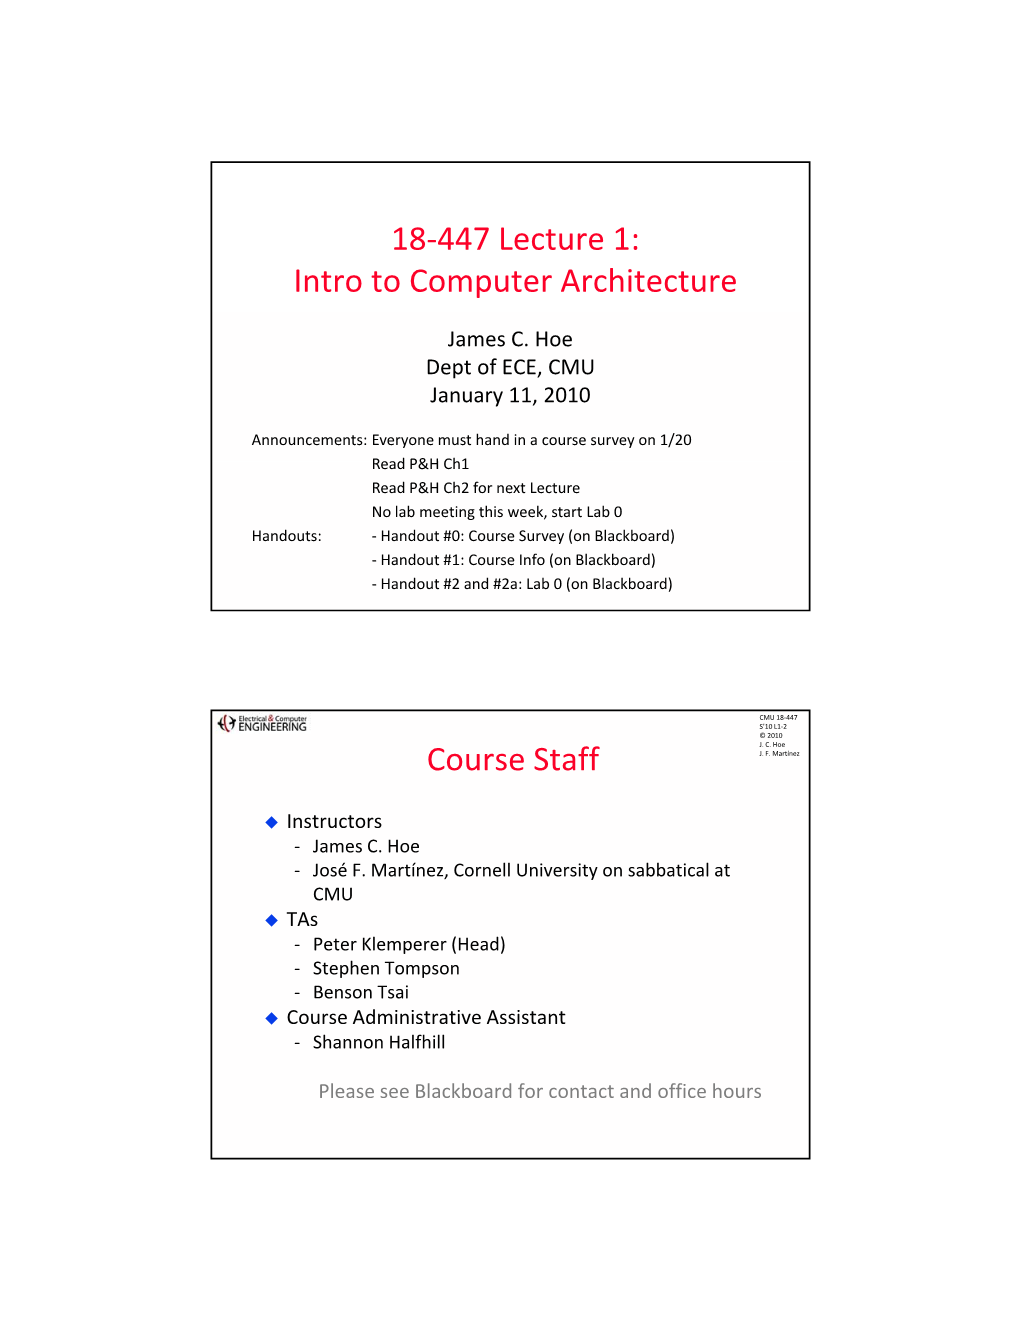 18-447 Lecture 1: Intro to Computer Architecture Course Staff